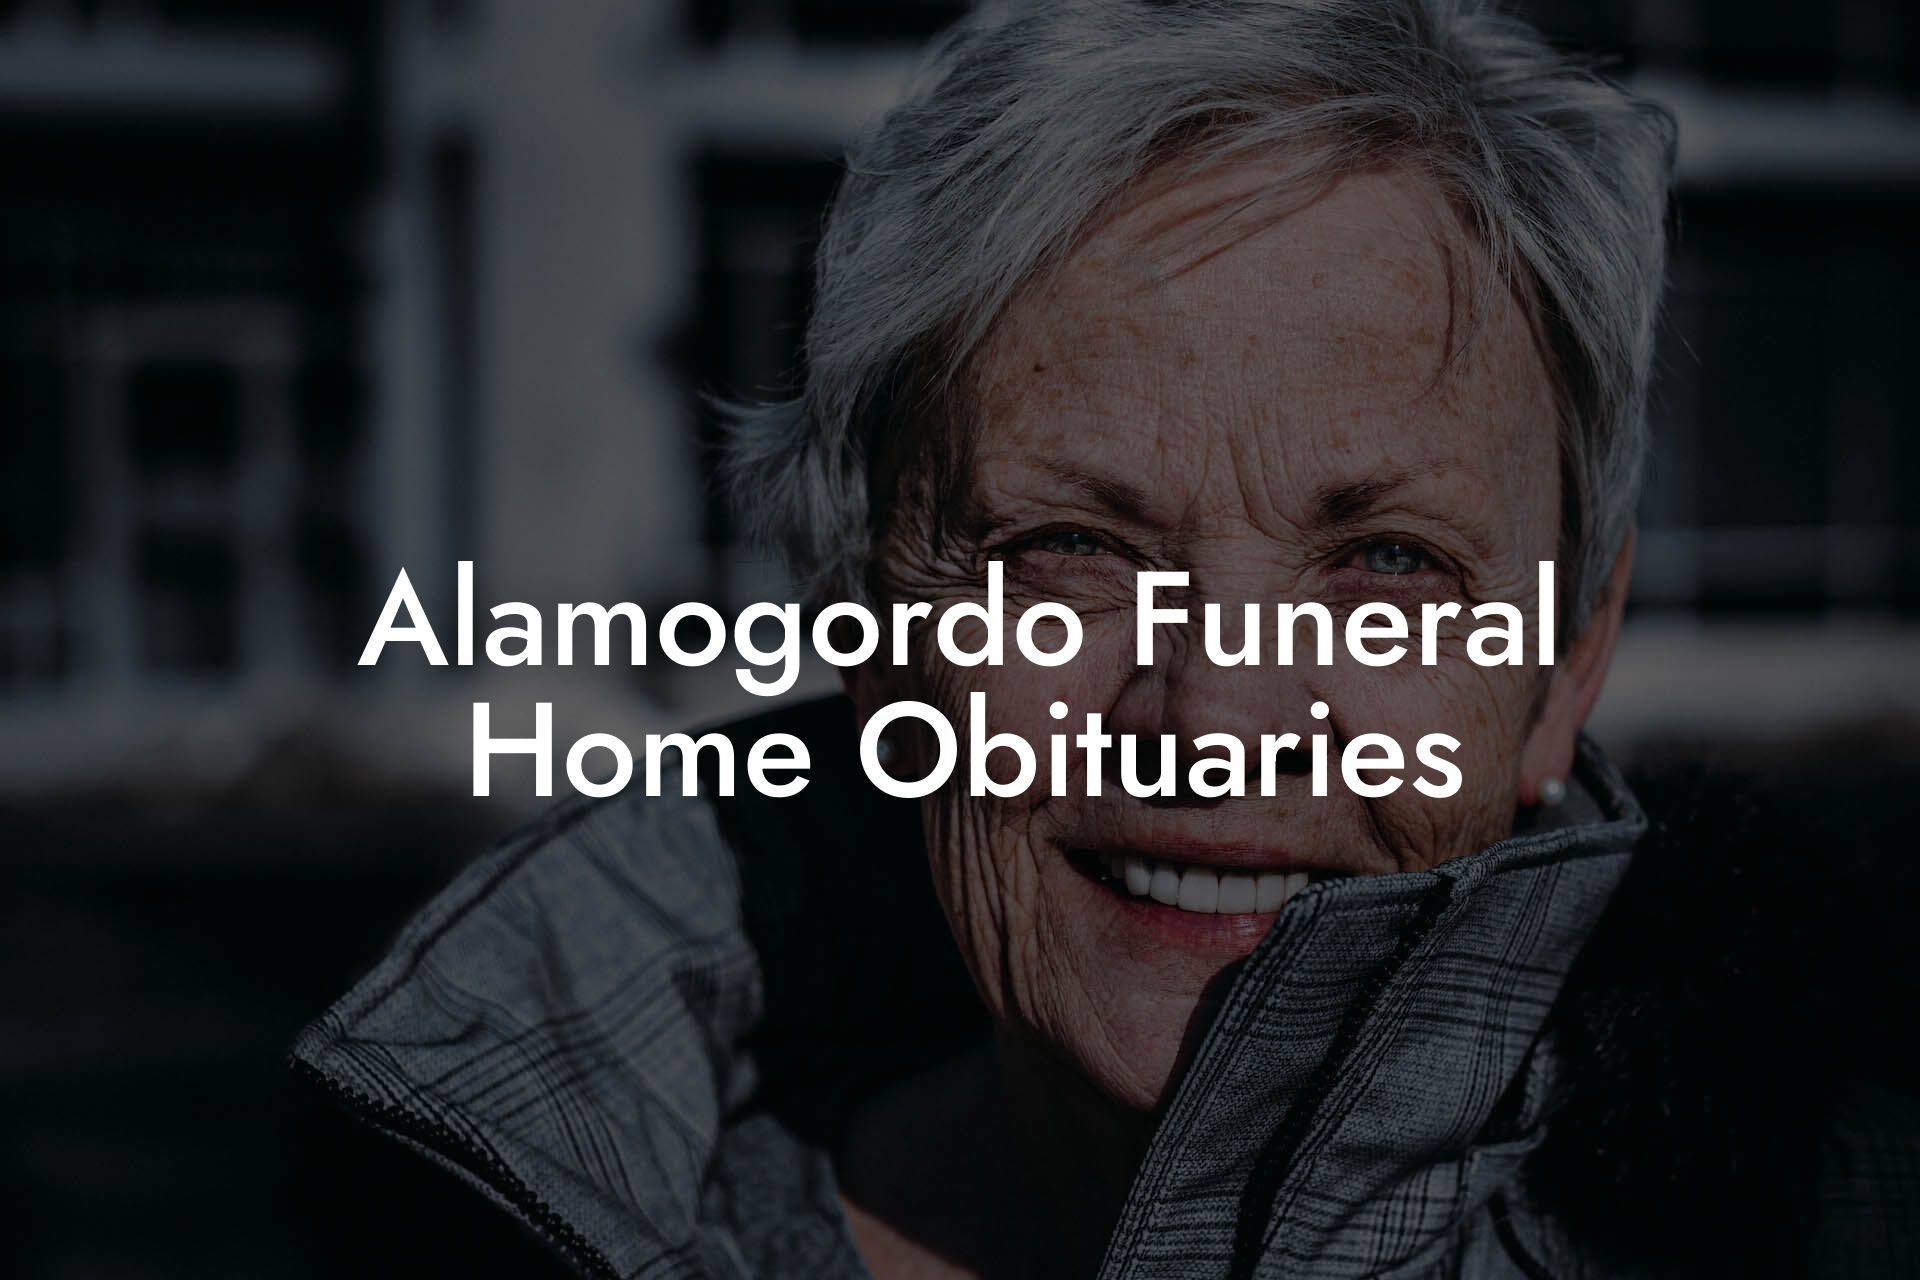 Alamogordo Funeral Home Obituaries